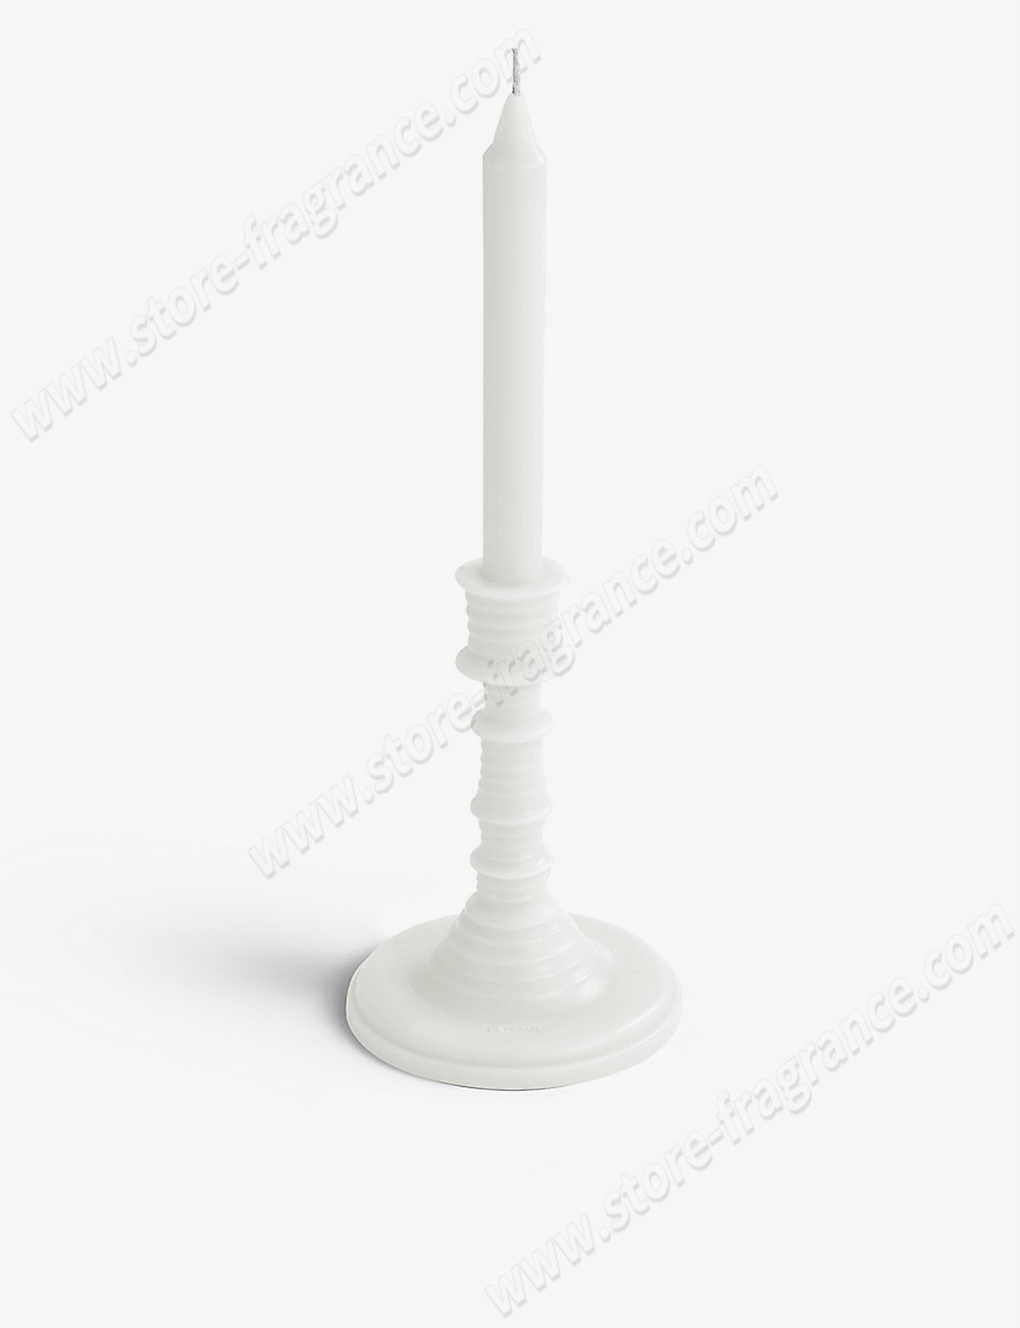 LOEWE/Oregano wax candlestick 330g ✿ Discount Store - -0